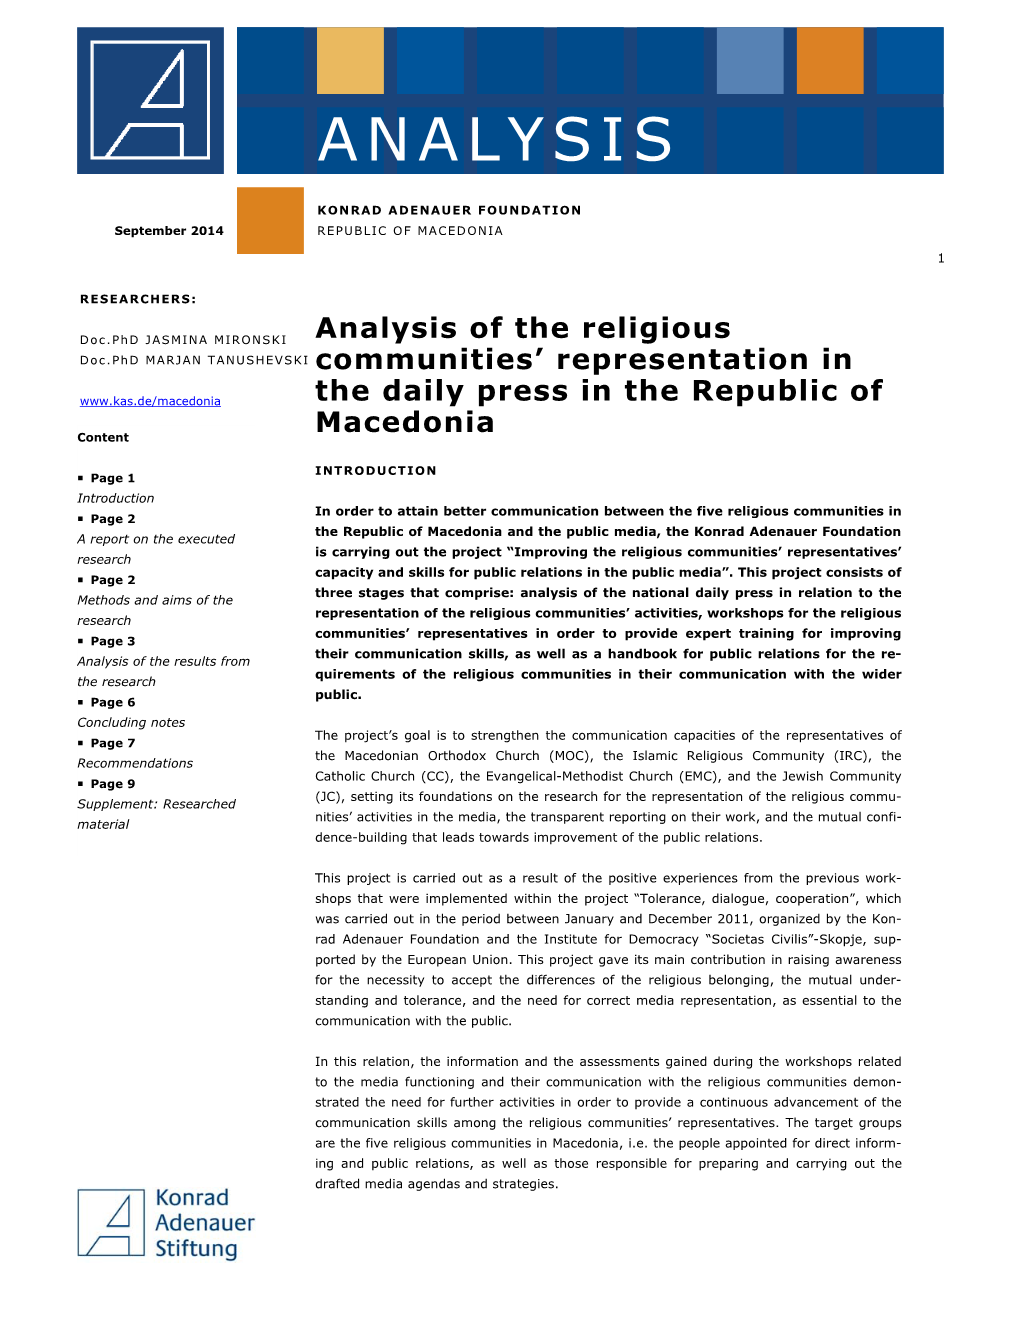 Analysis of the Religious Communities